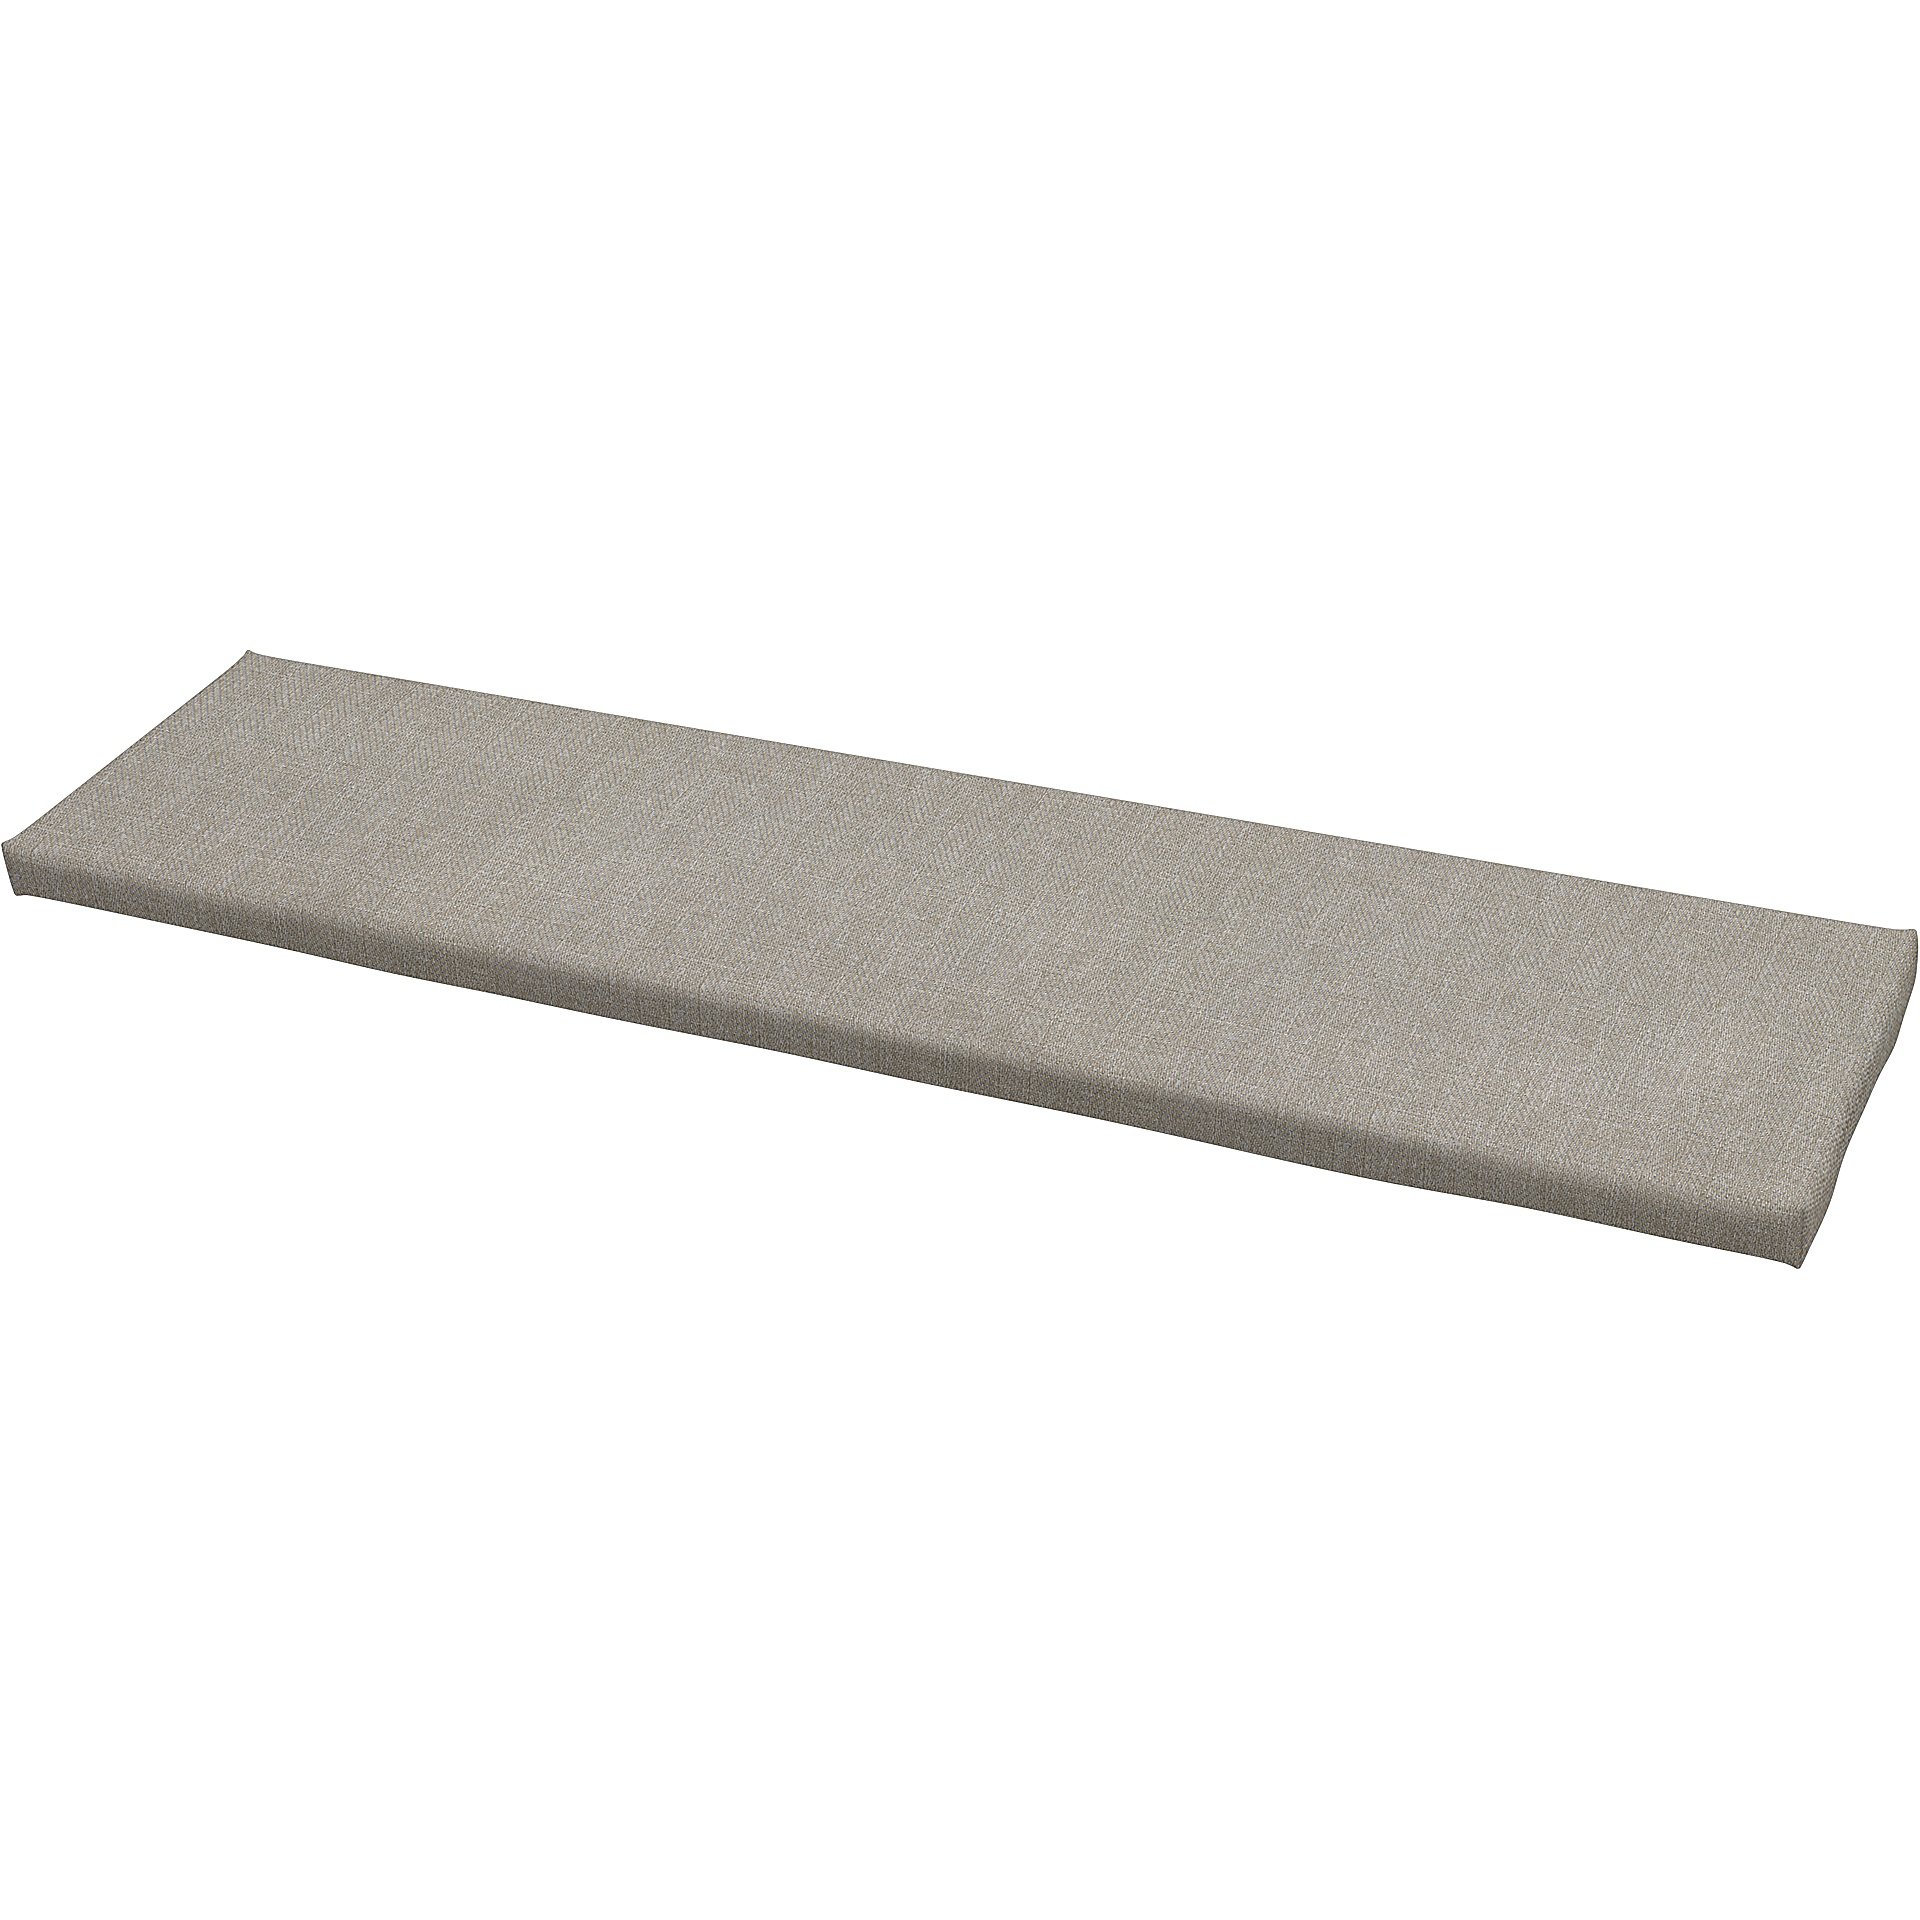 IKEA - Universal bench cushion cover 140x35x3,5 cm, Greige, Boucle & Texture - Bemz